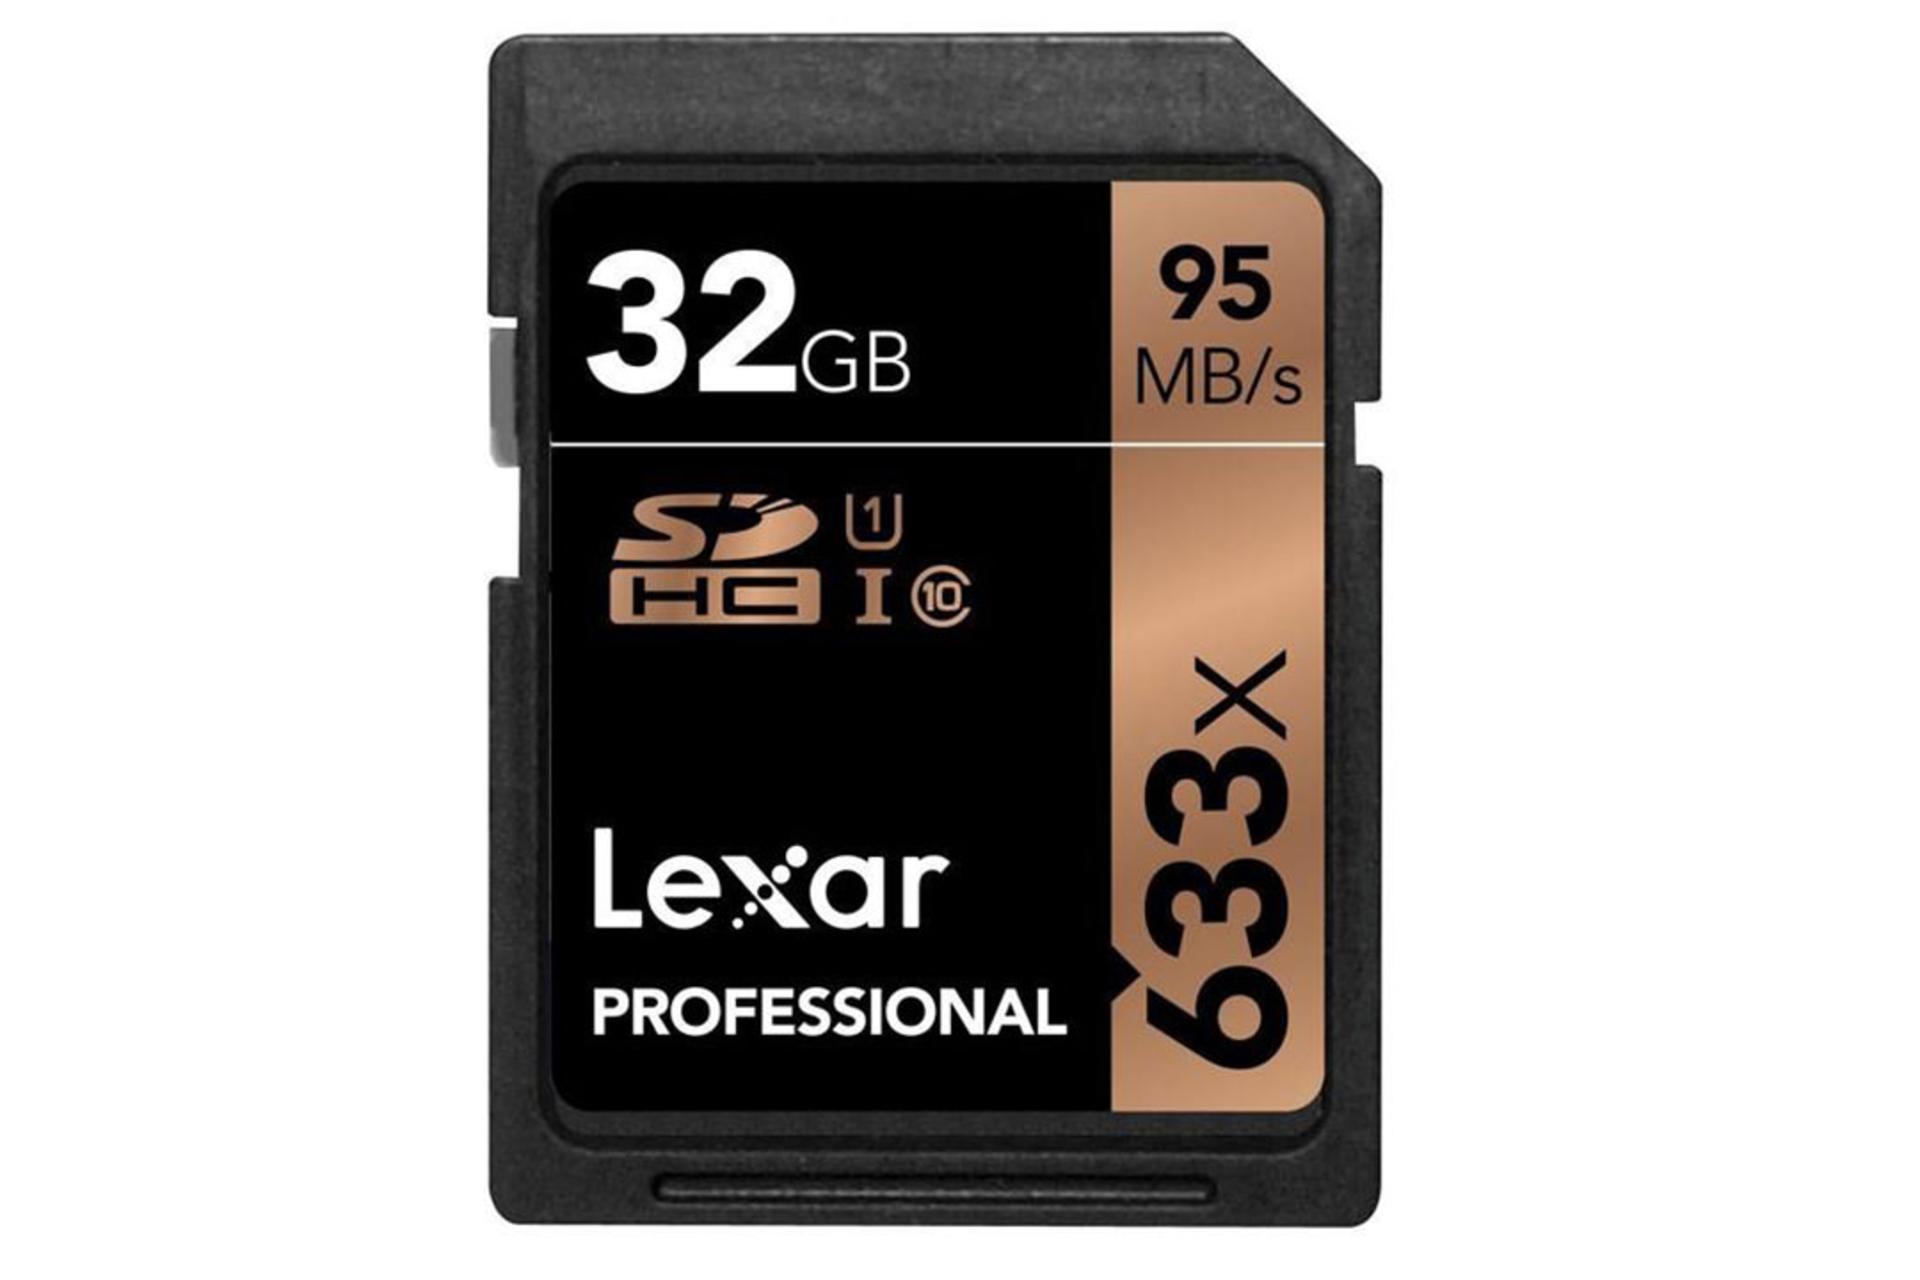 Lexar Professional SDHC Class 10 UHS-I U1 32GB